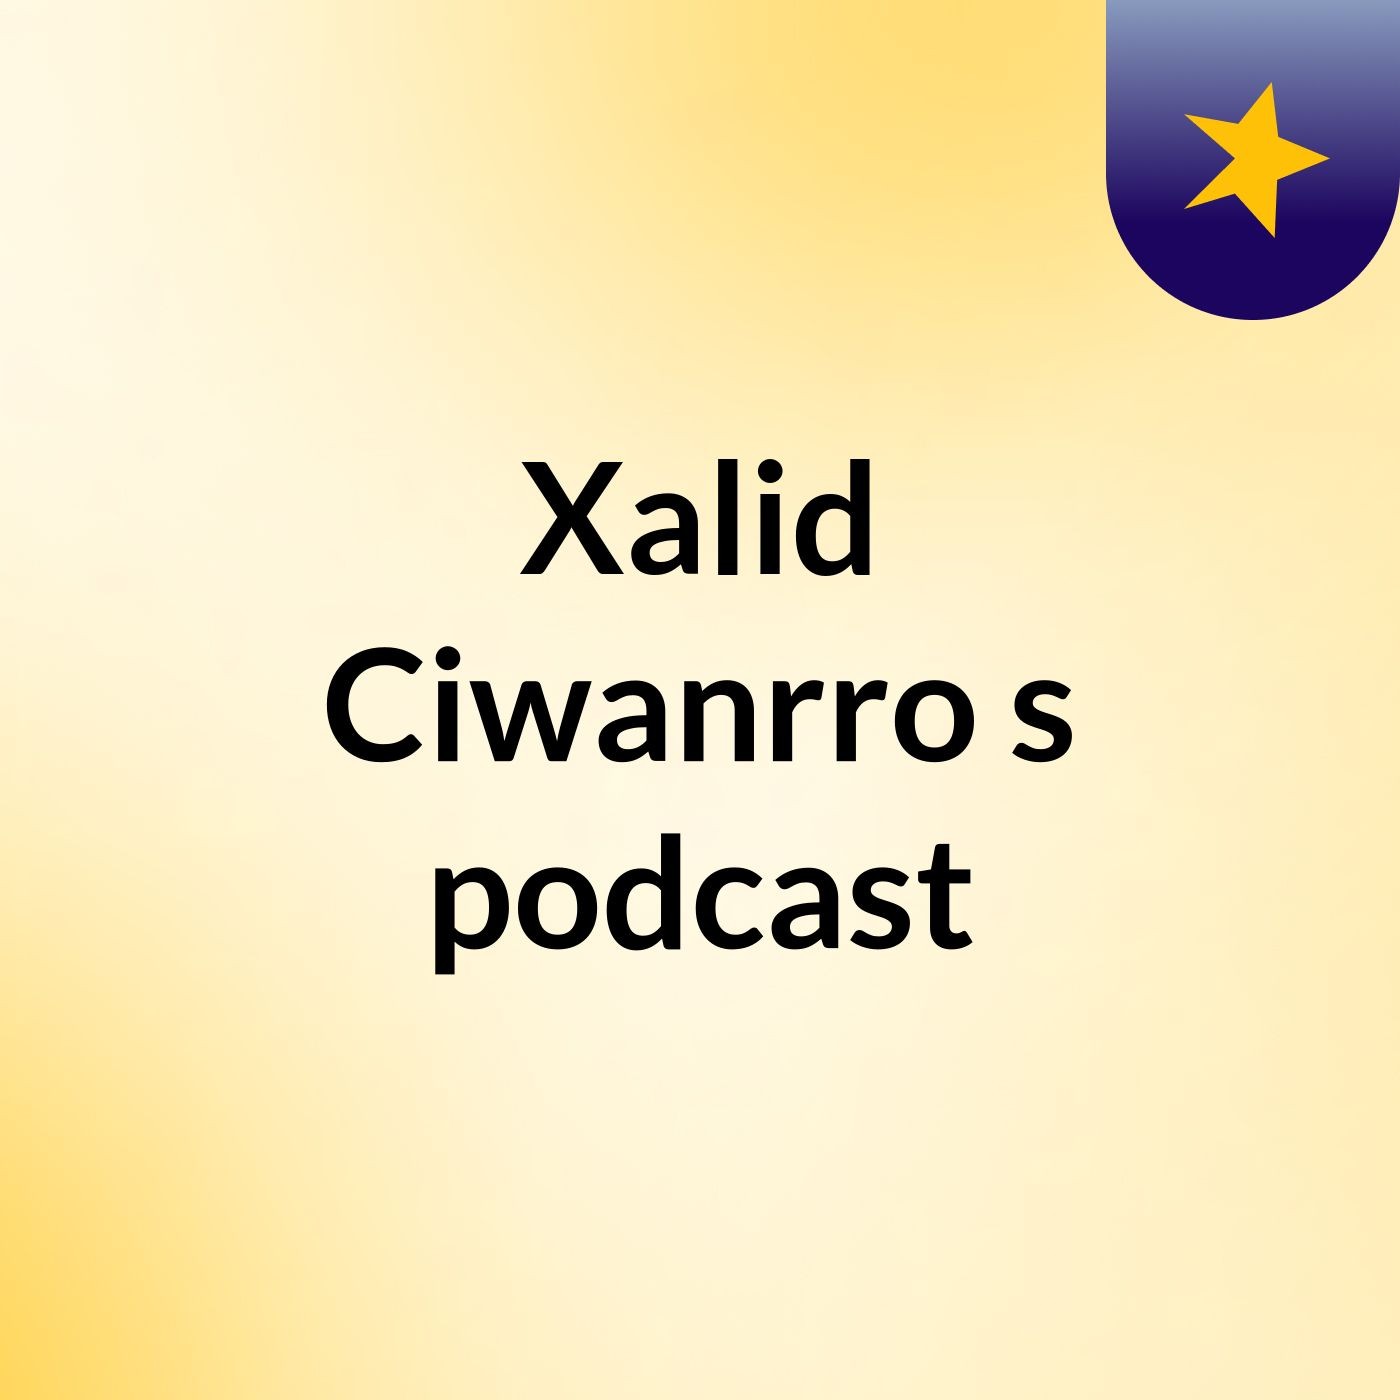 Xalid Ciwanrro's podcast